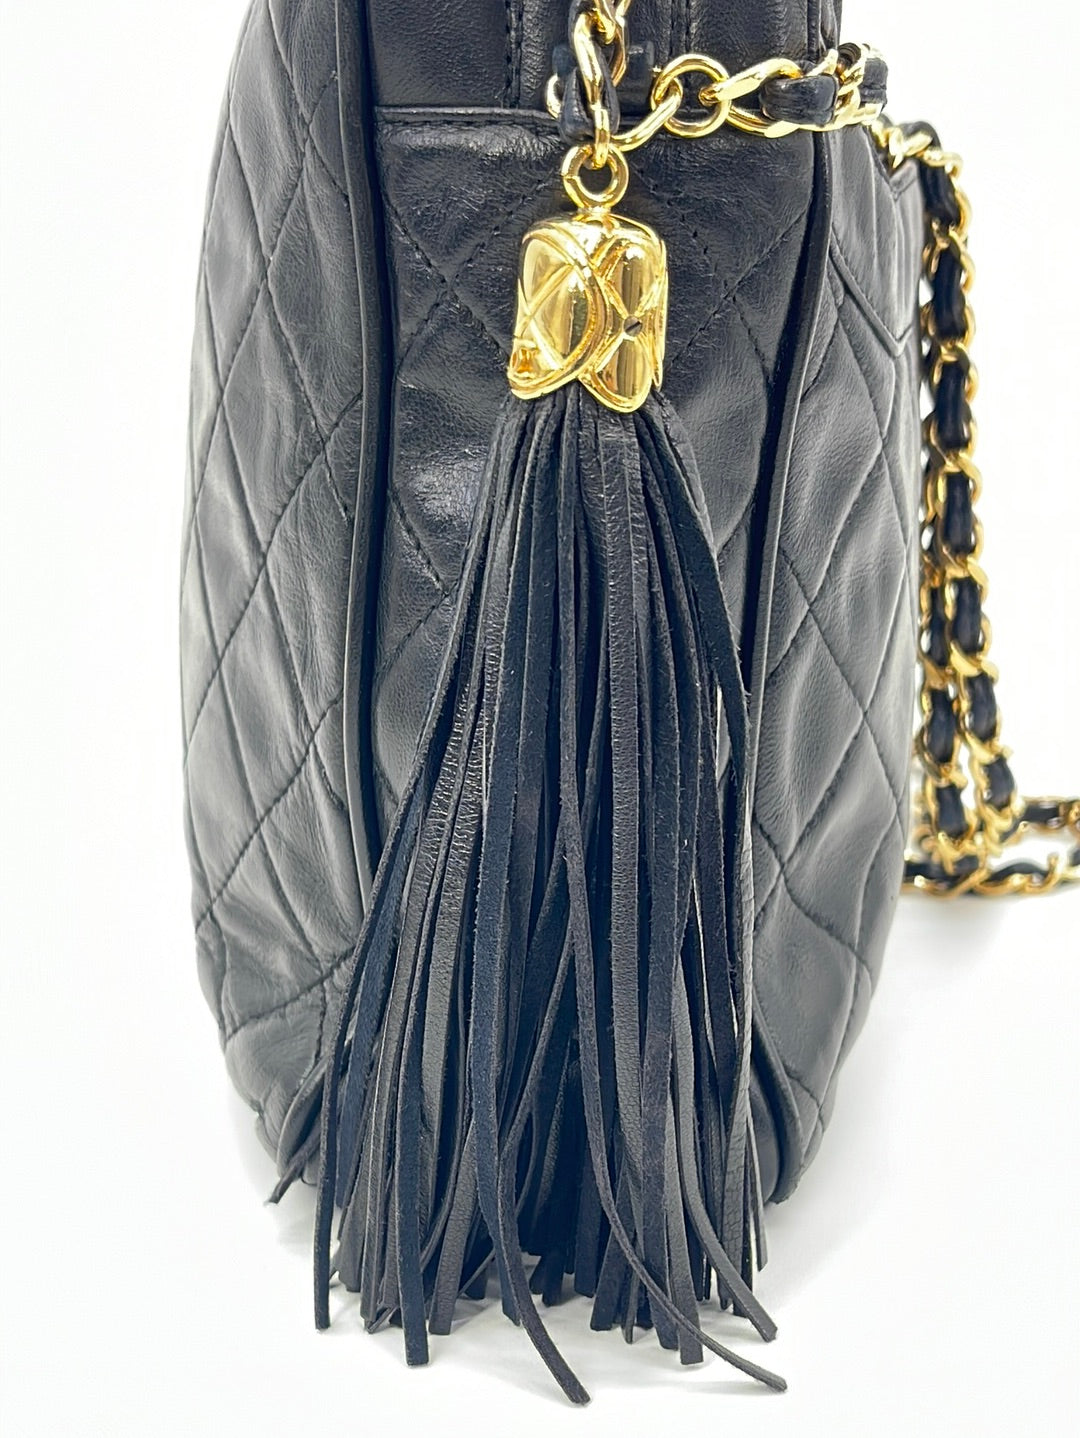 PRELOVED CHANEL Black Quilted Lambskin Tassel Chain Camara Bag 2616033 – KimmieBBags  LLC